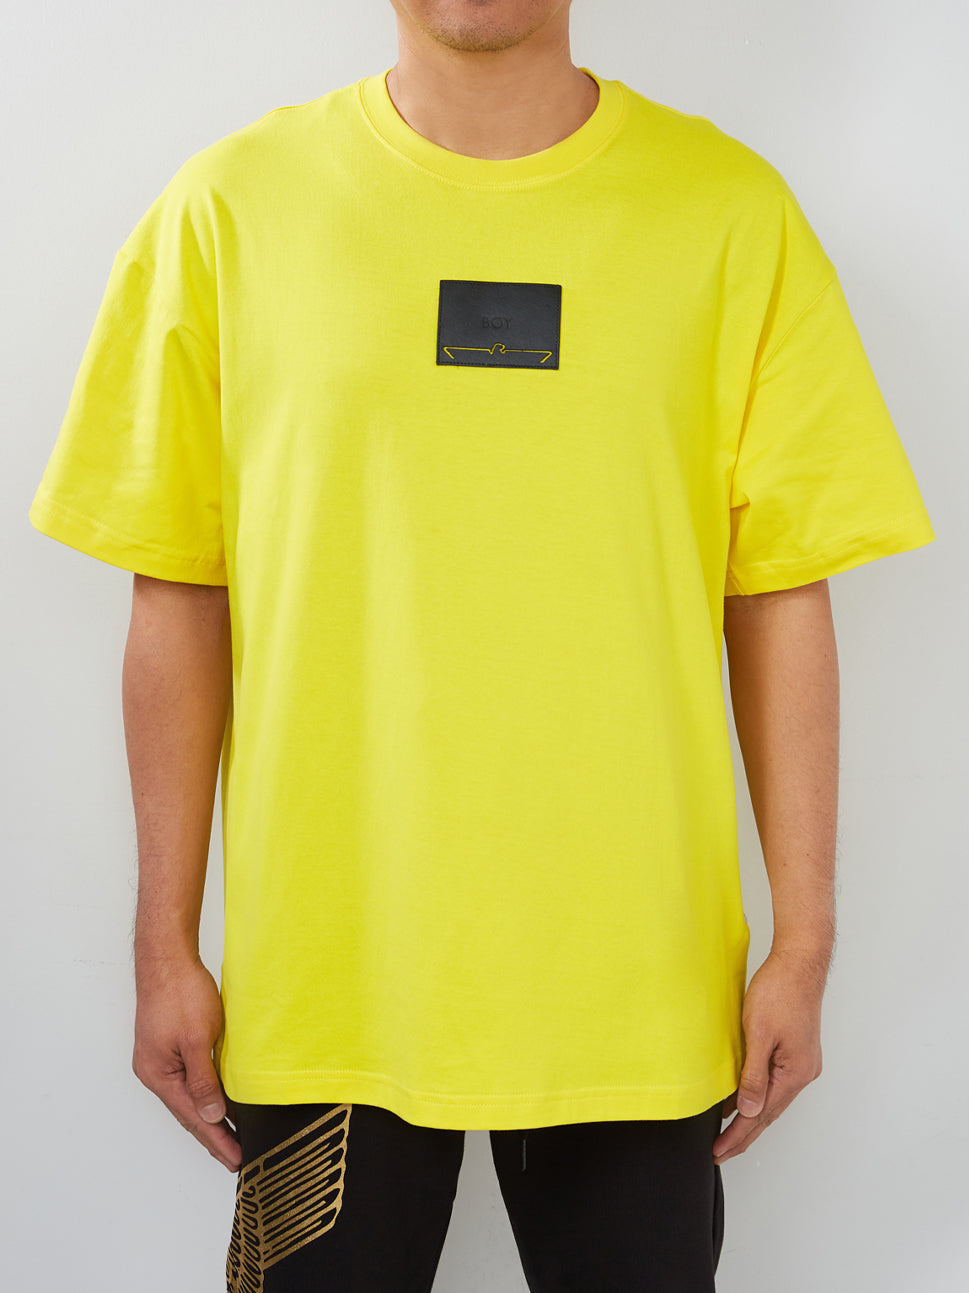 Boy London B Is For Boy T Shirt Yellow